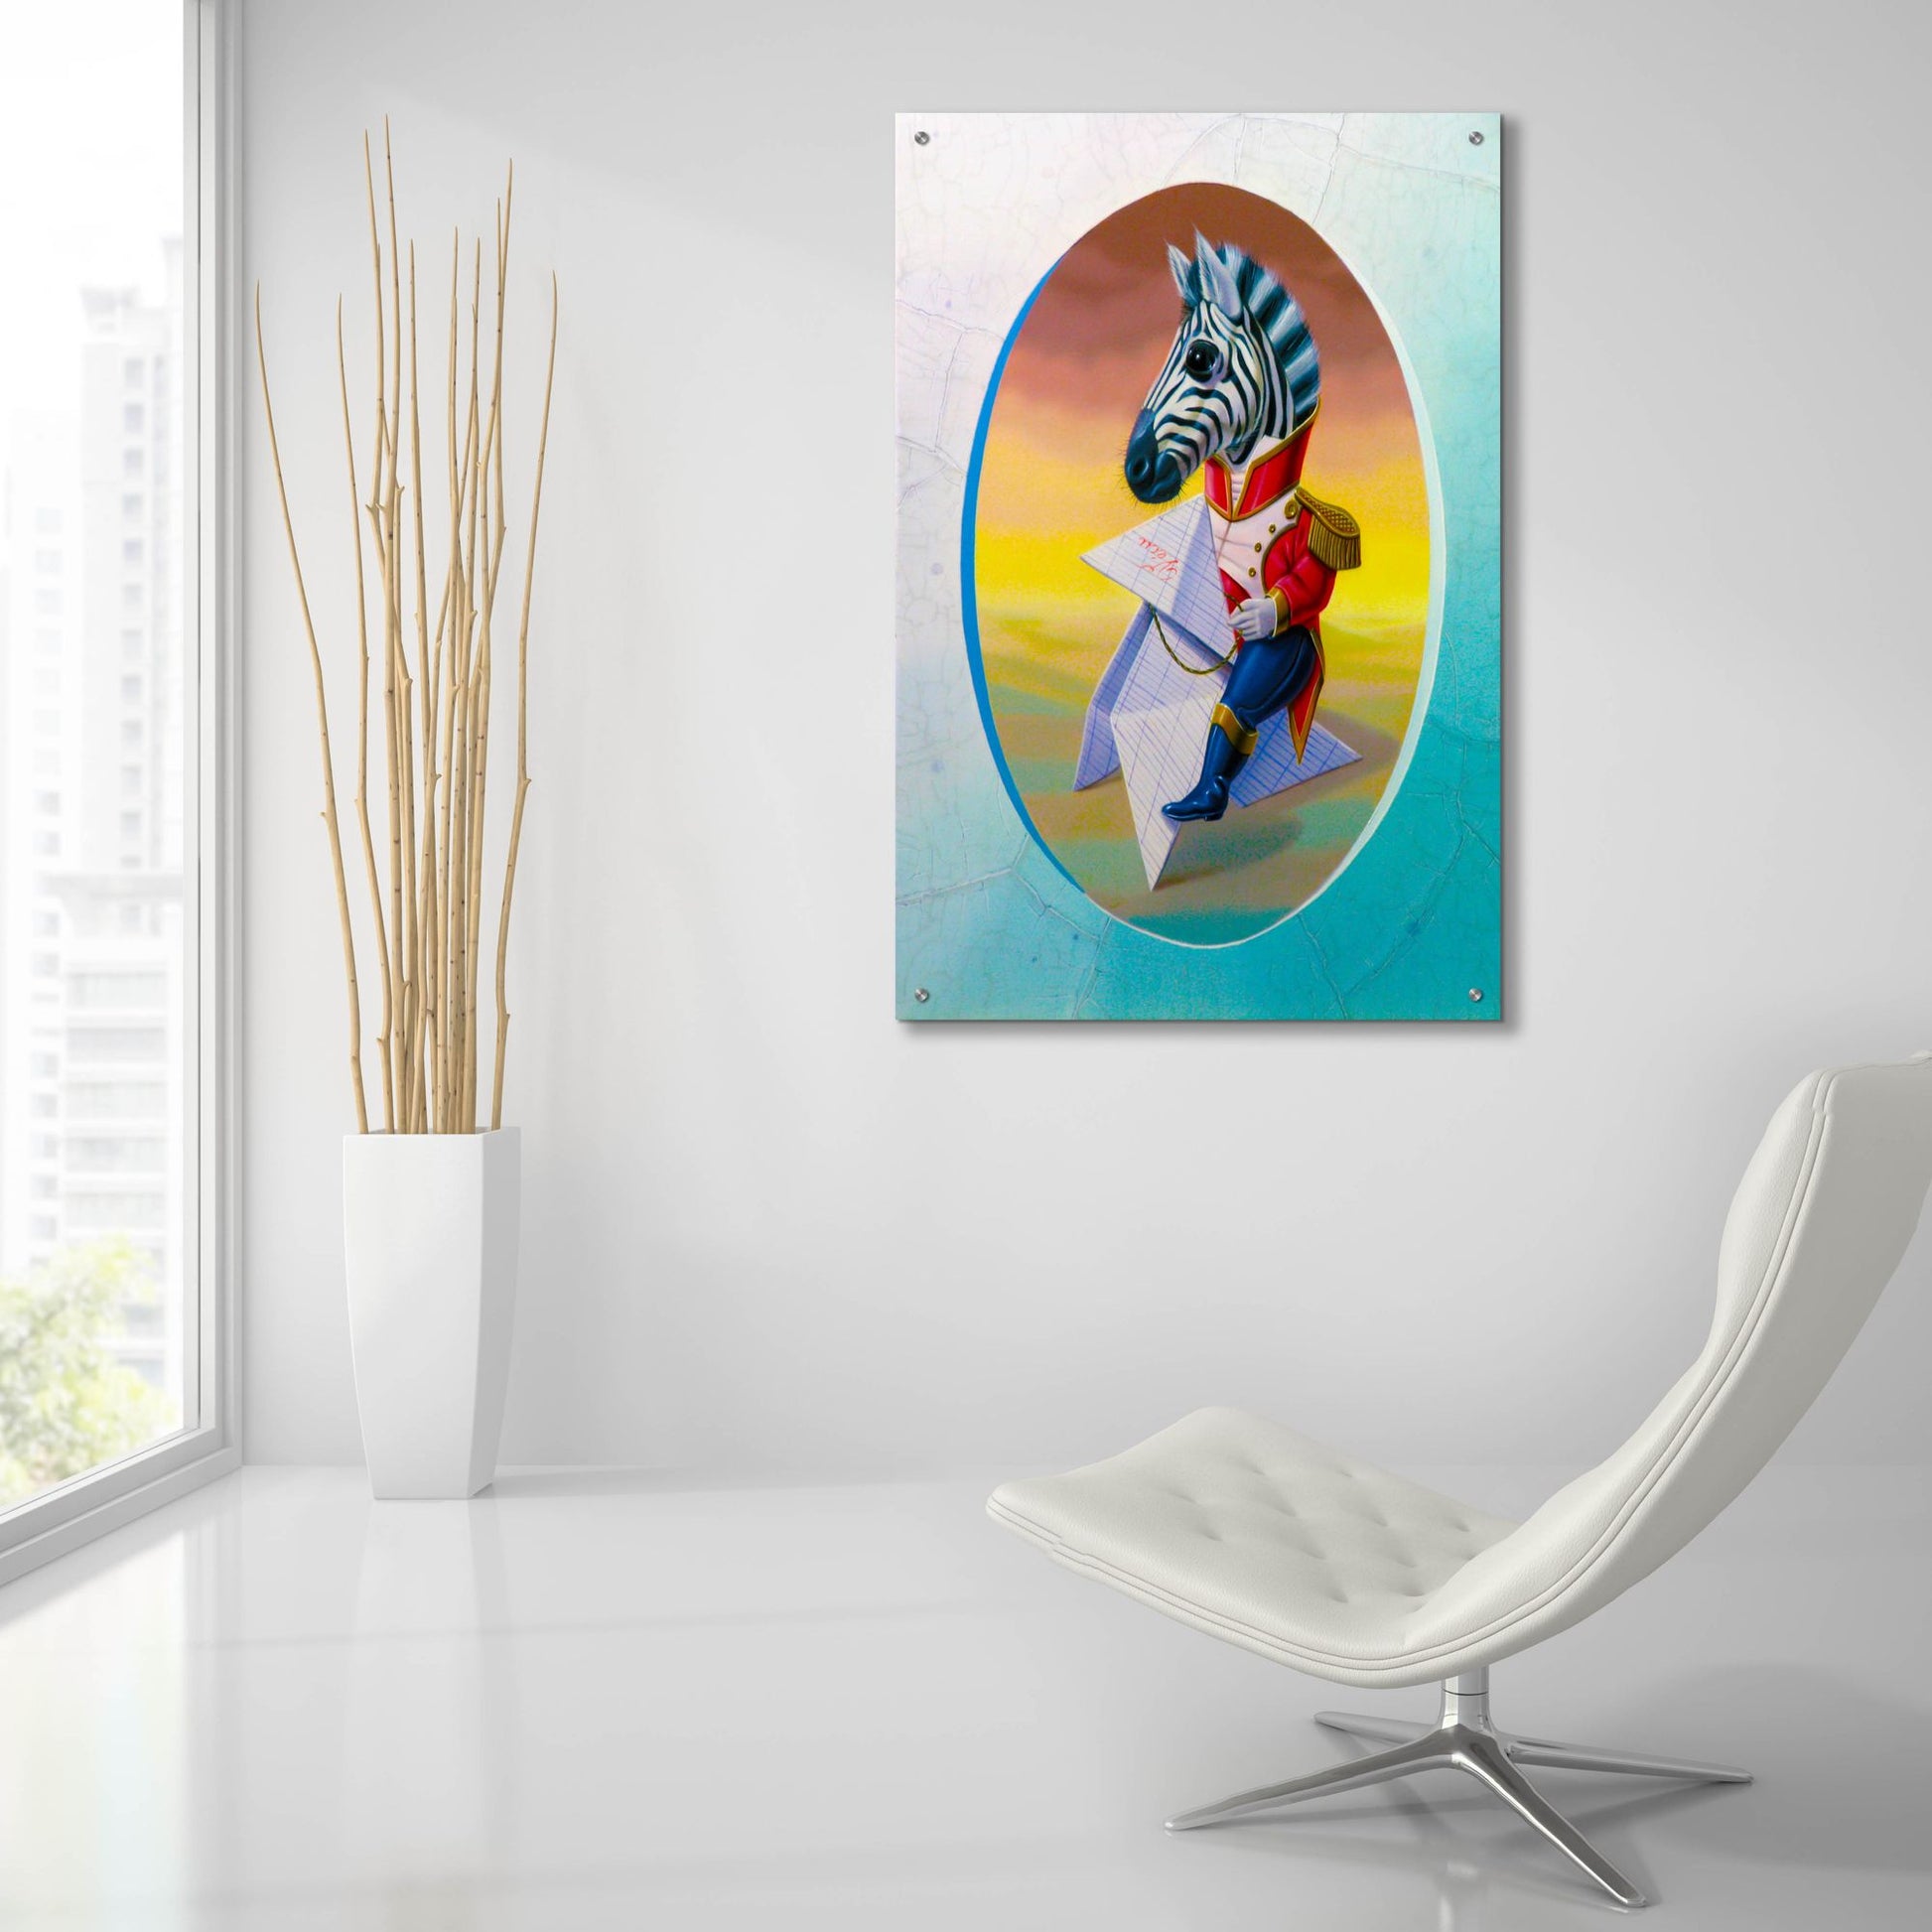 Epic Art 'Mister Zebra' by Valery Vecu Quitard, Acrylic Glass Wall Art,24x36